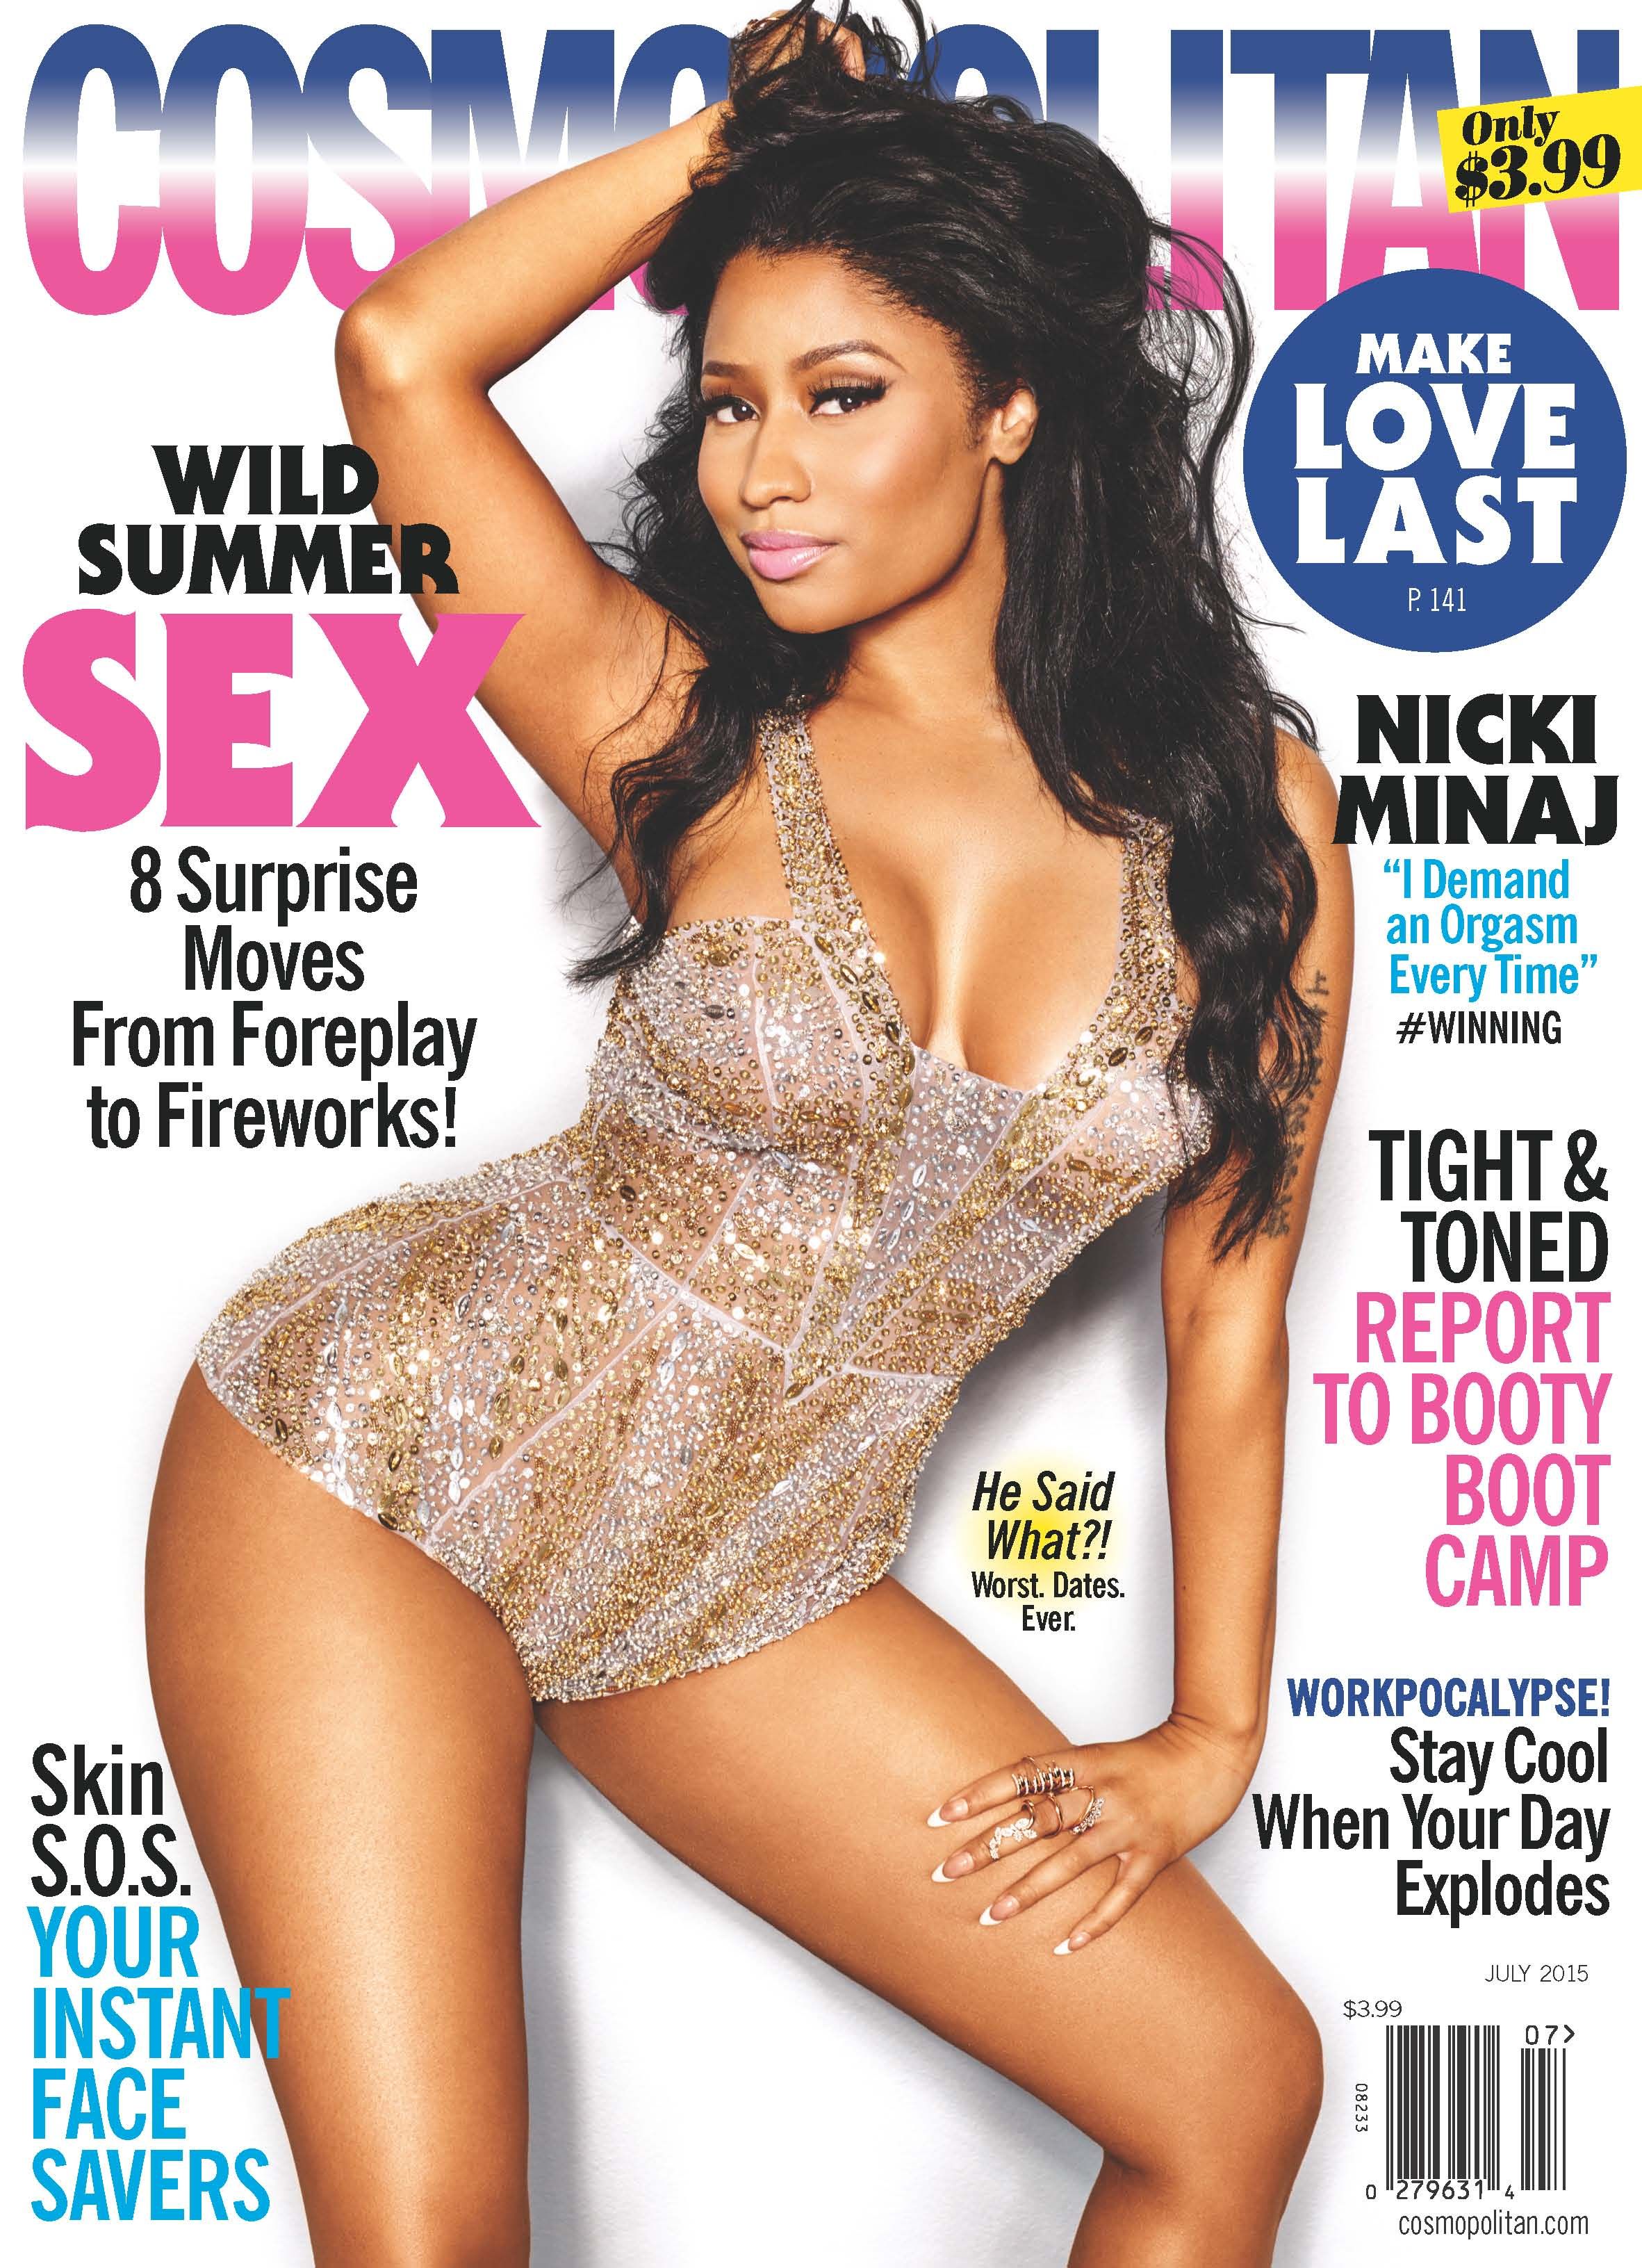 Nicki - Nicki Minaj Wants All Women to Demand More Orgasms